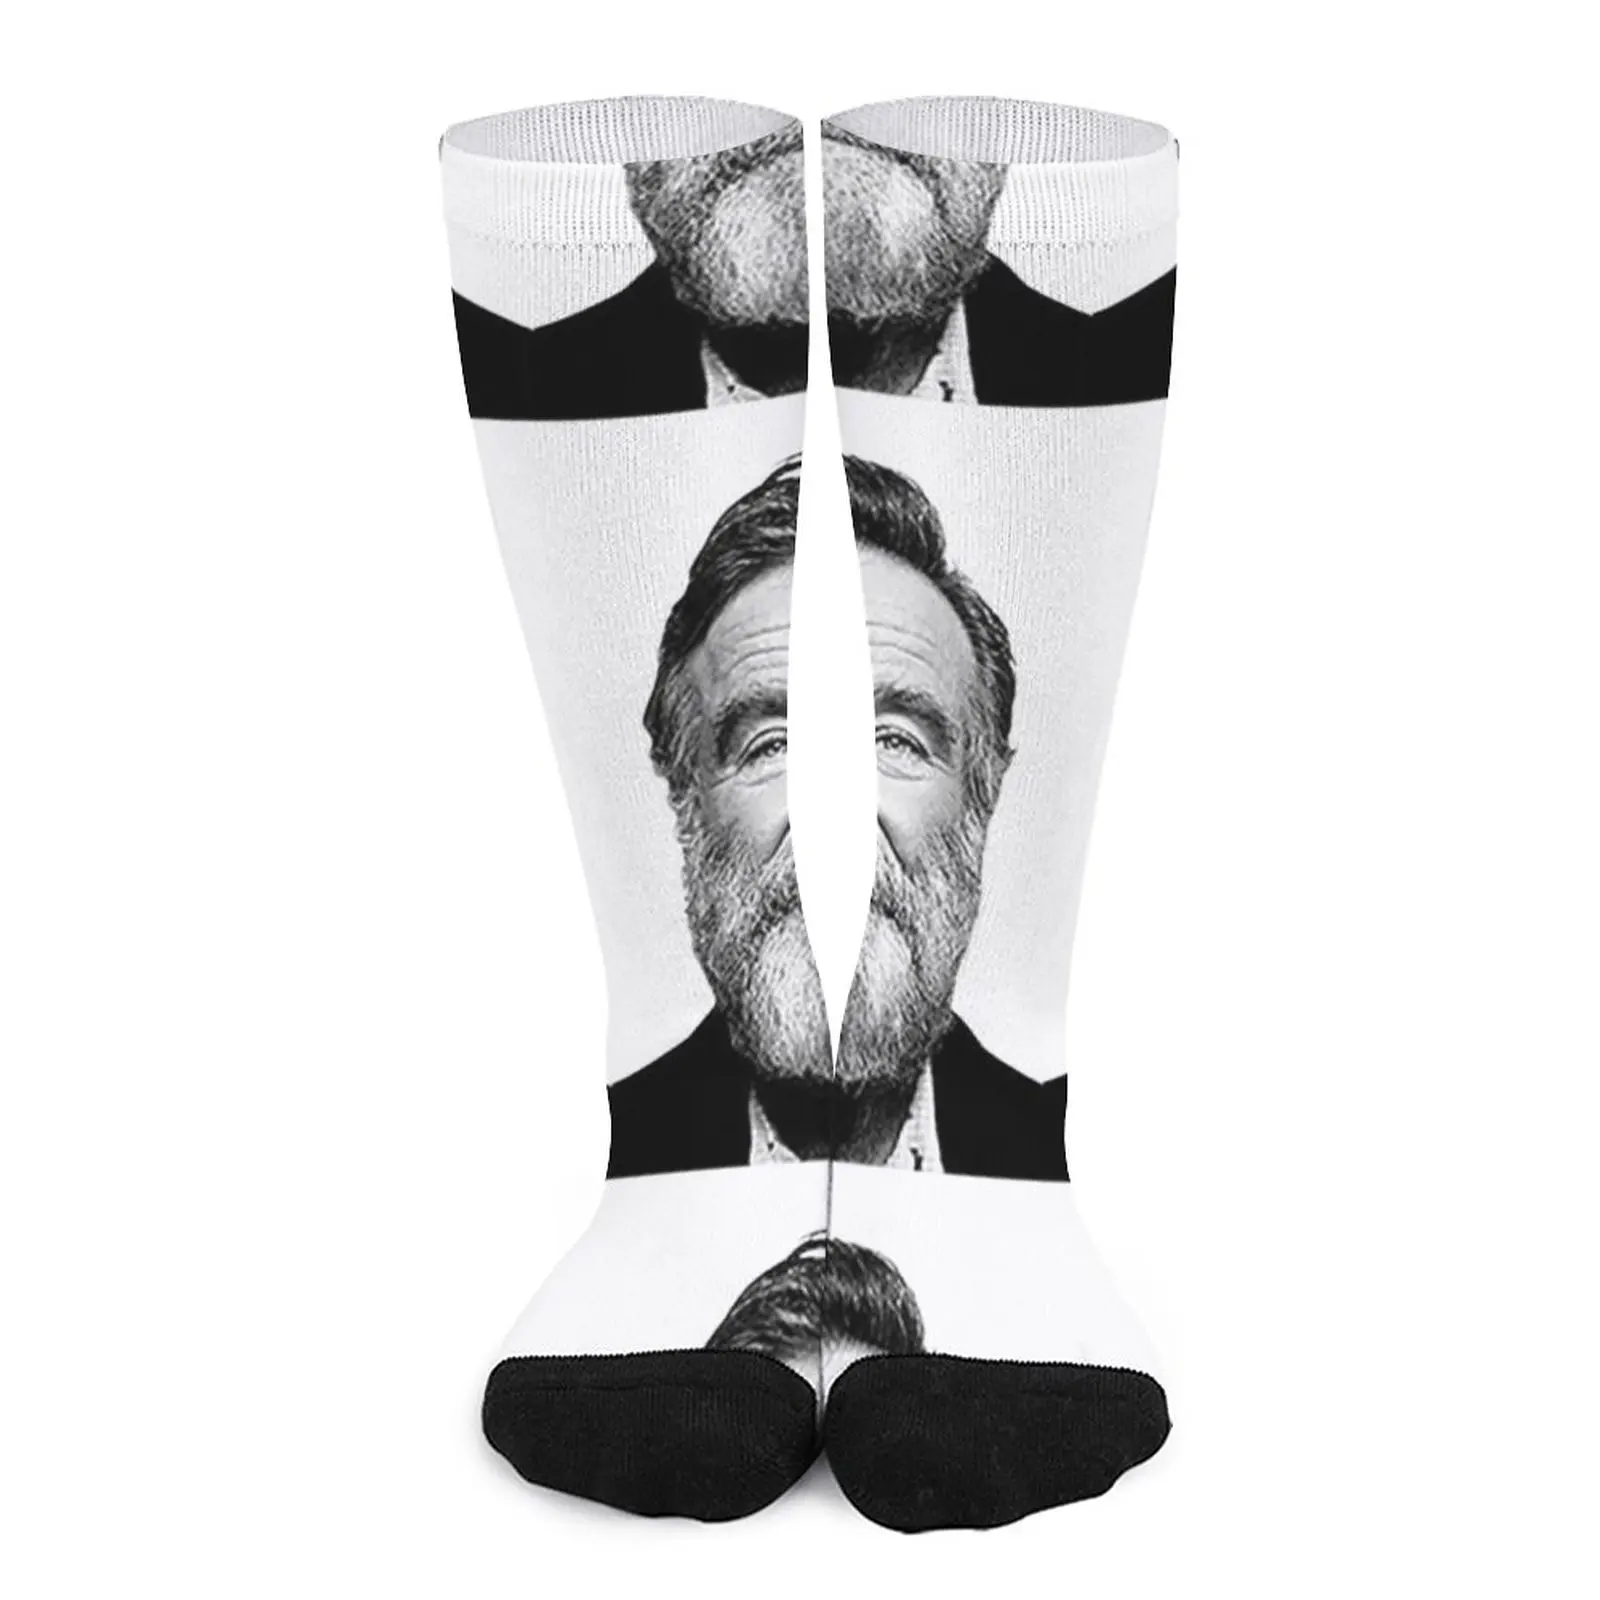 Robin Williams Socks Men's winter socks men socks winter socks men Stockings compression cootie williams rex stewart big challenge lp